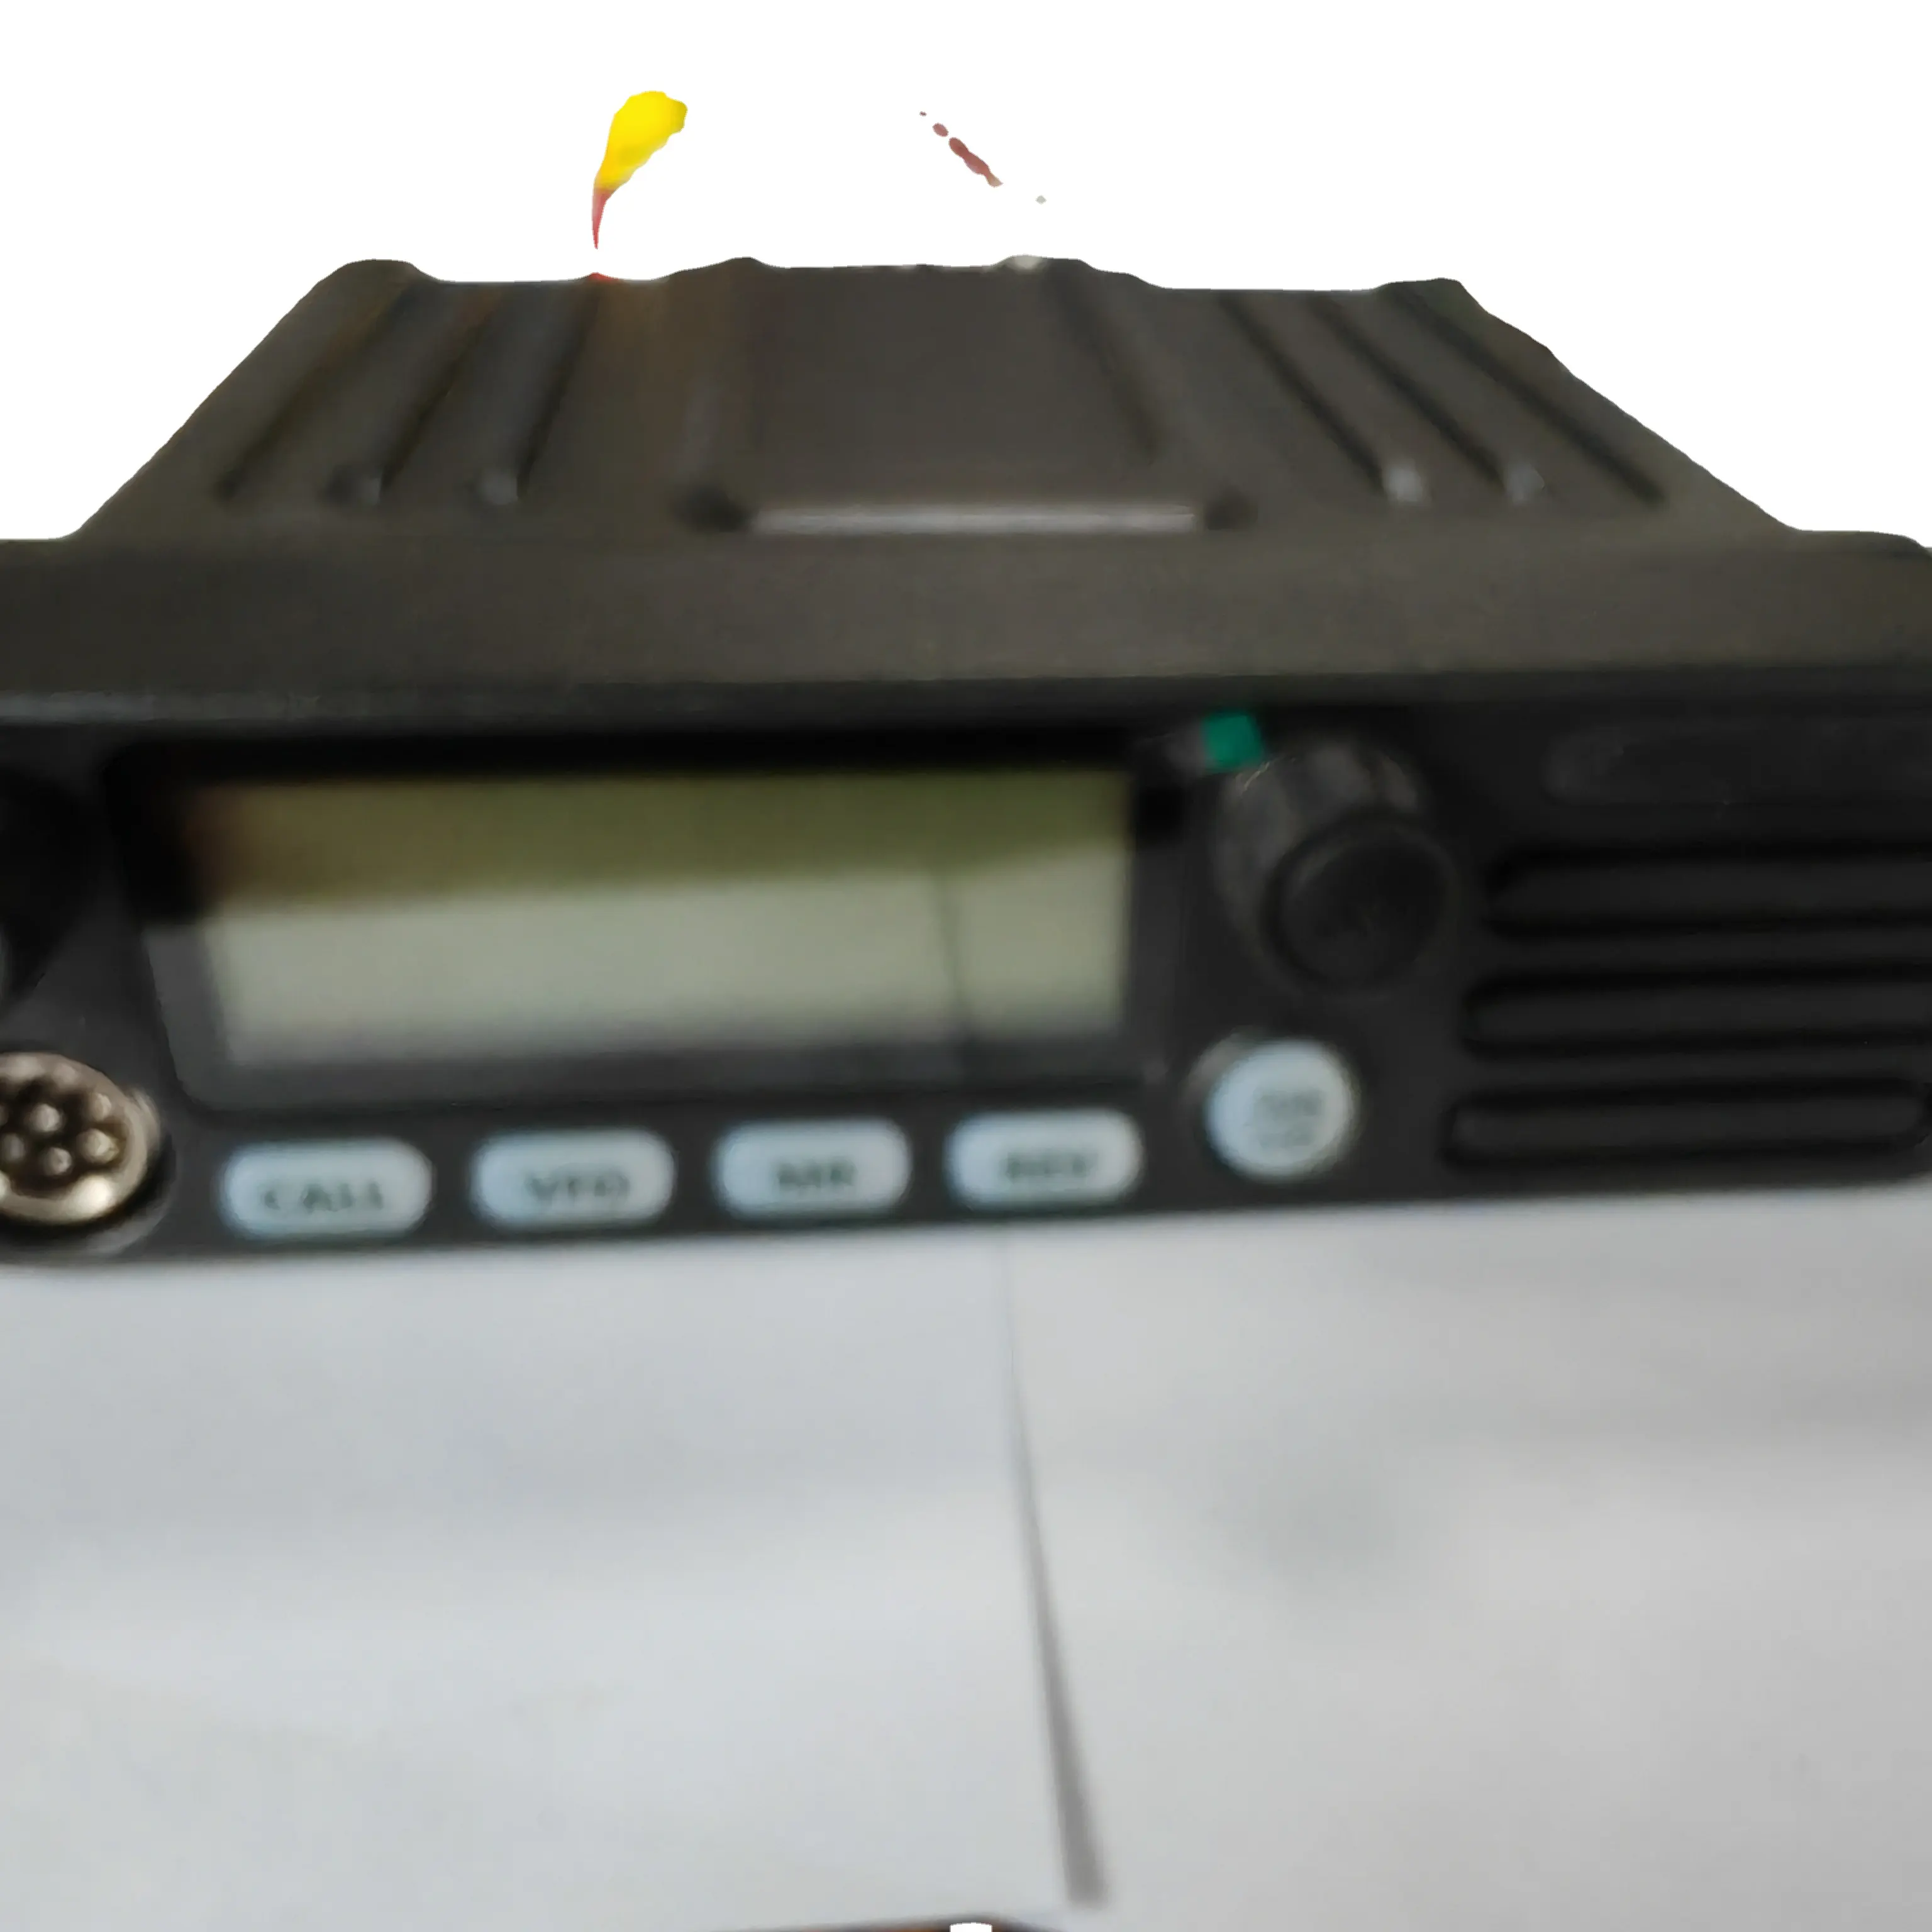 ET-M806 80W güçlü sinyal yüksek frekanslı mobil radyo, deniz radyo, FM radyo alıcı-verici uzun menzilli walkie talkies baz radyo